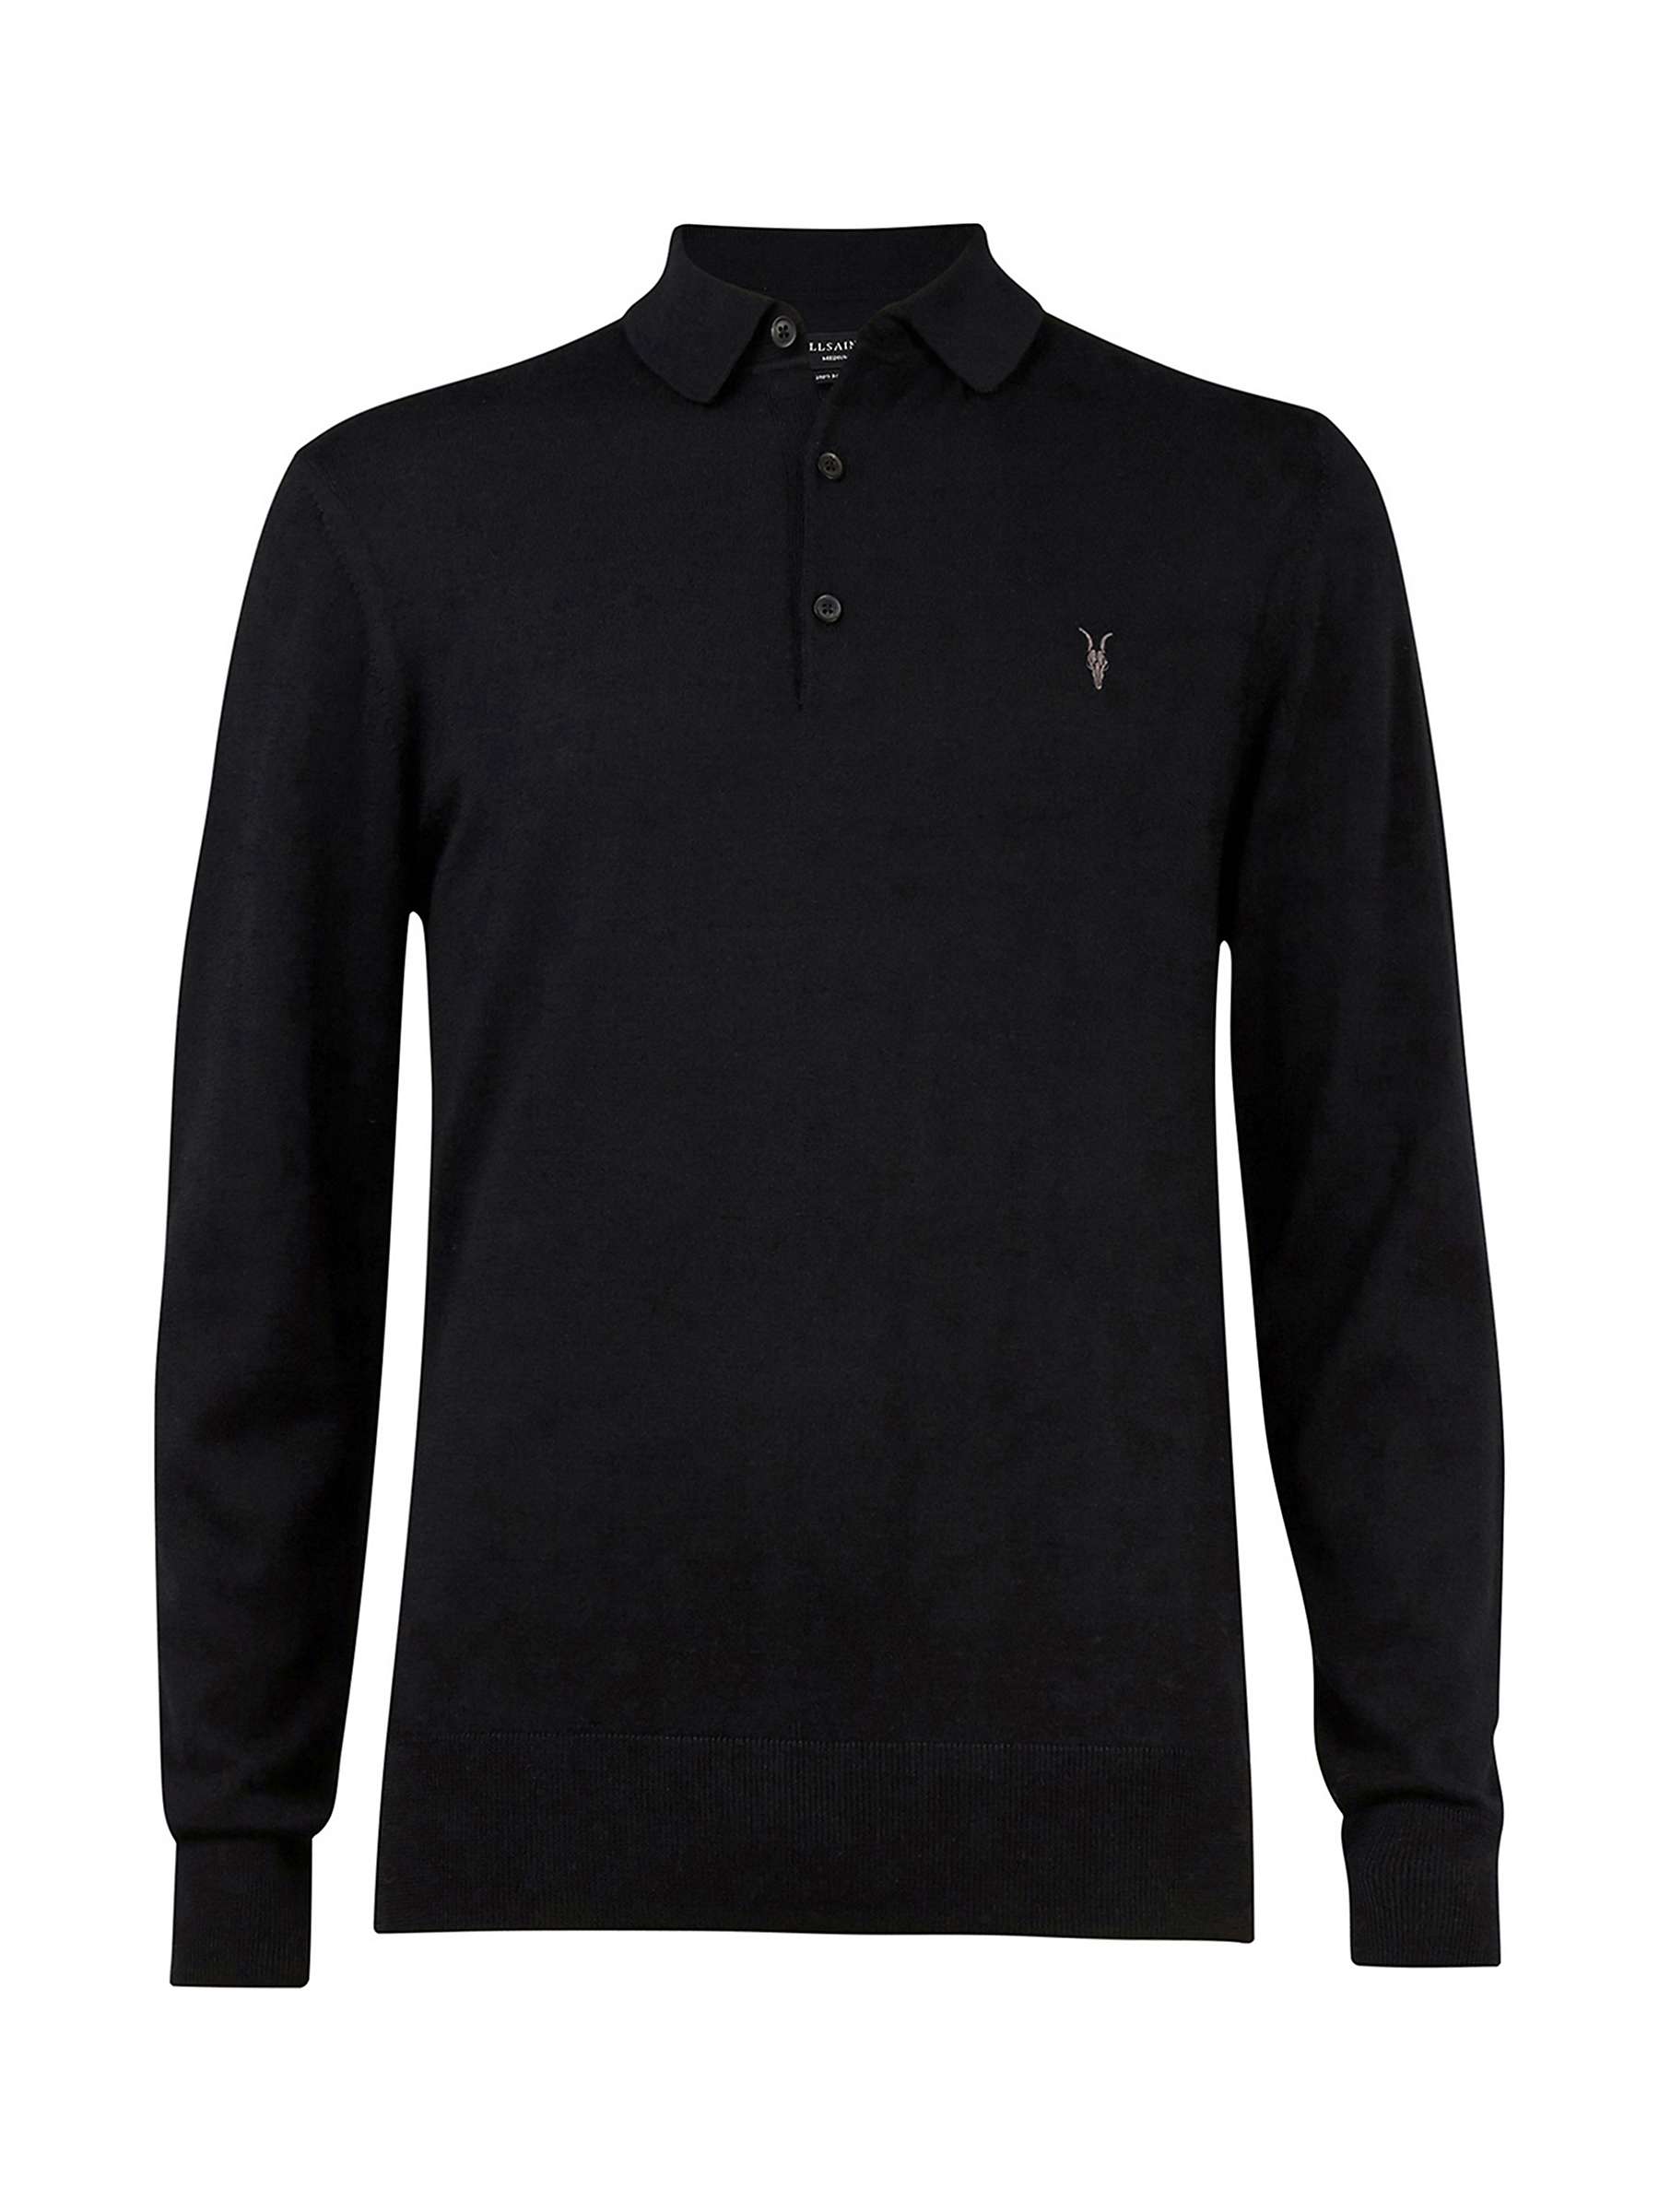 Buy AllSaints Mode Merino Slim Fit Polo Shirt Online at johnlewis.com